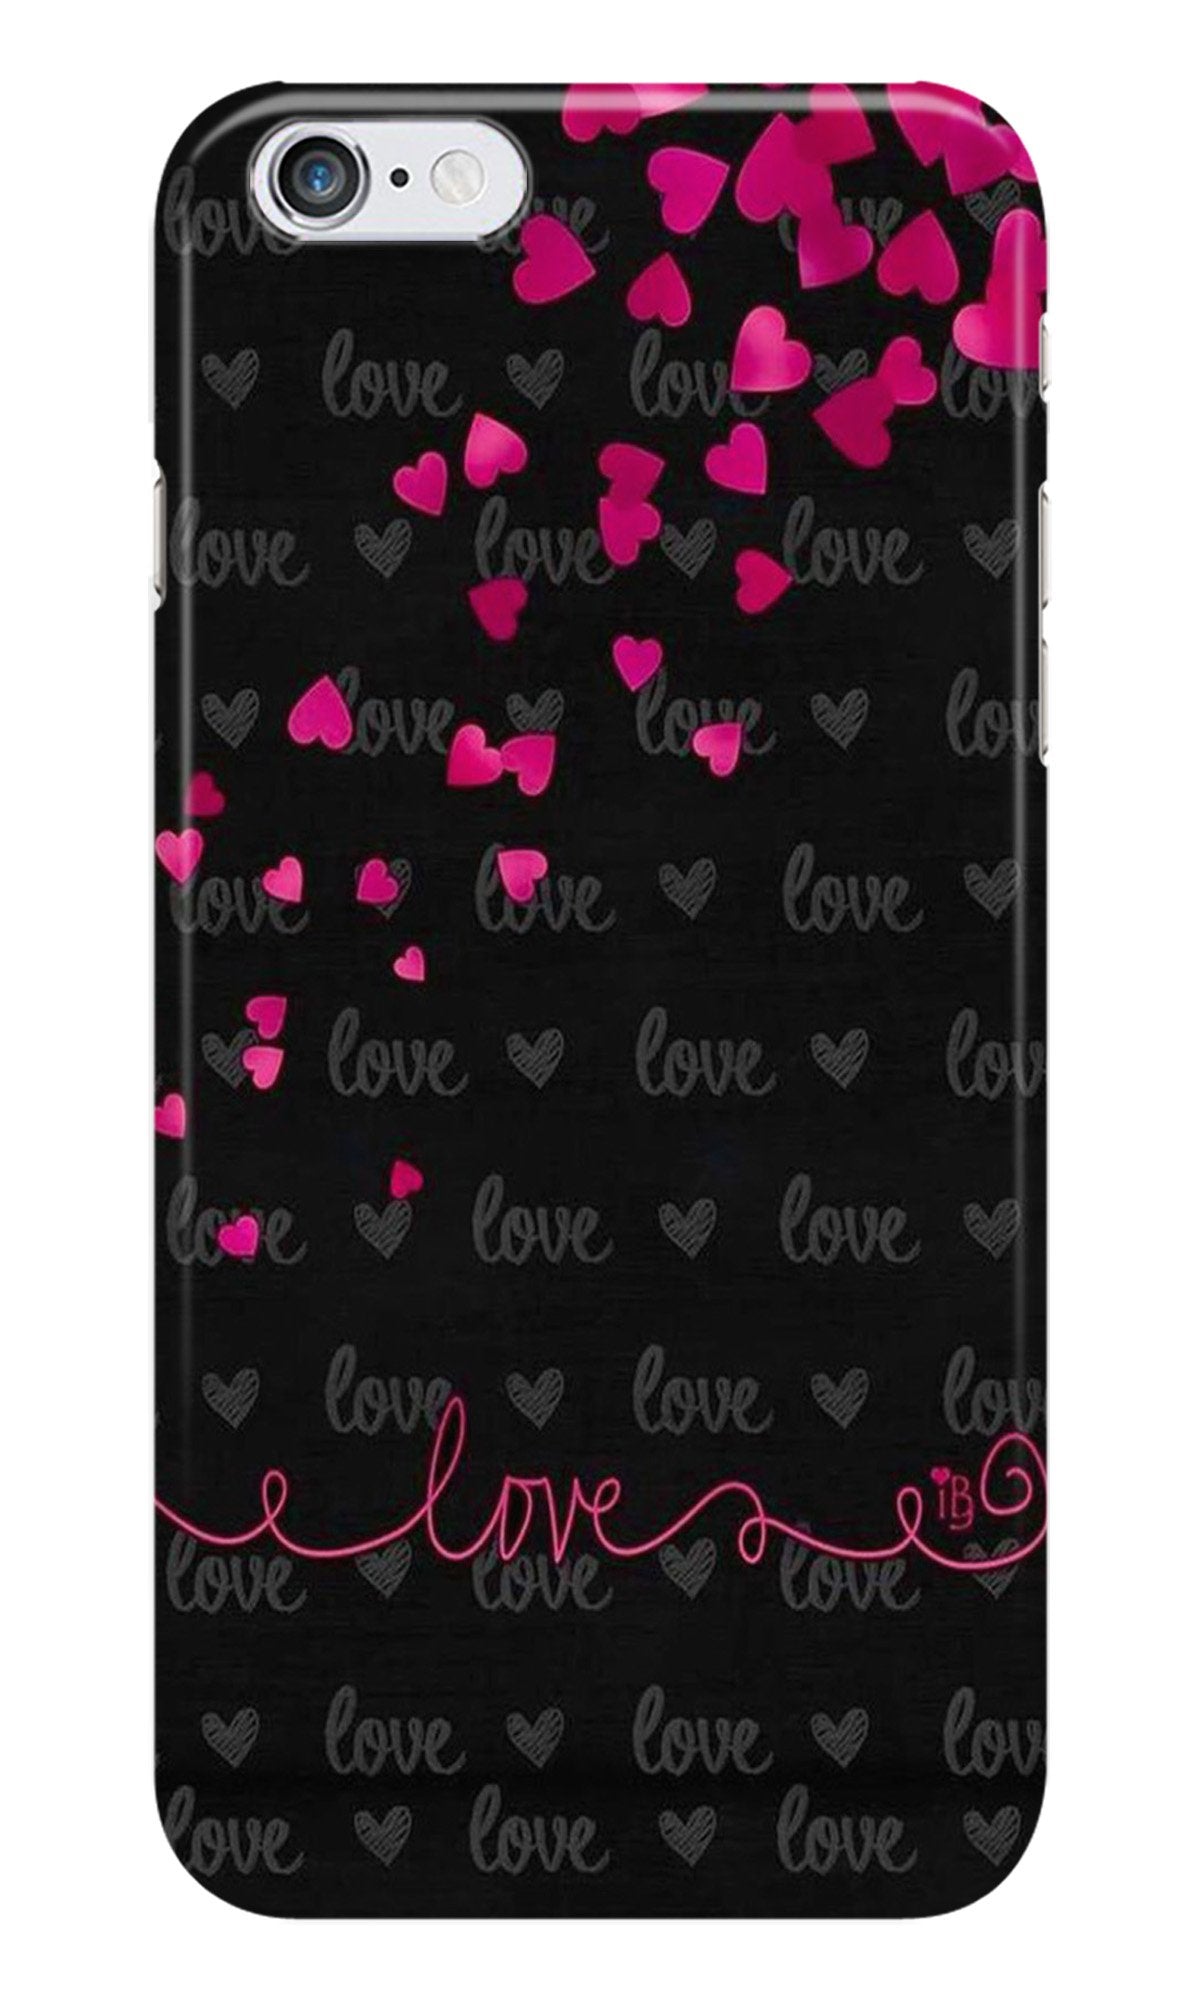 Love in Air Case for iPhone 6 Plus/ 6s Plus